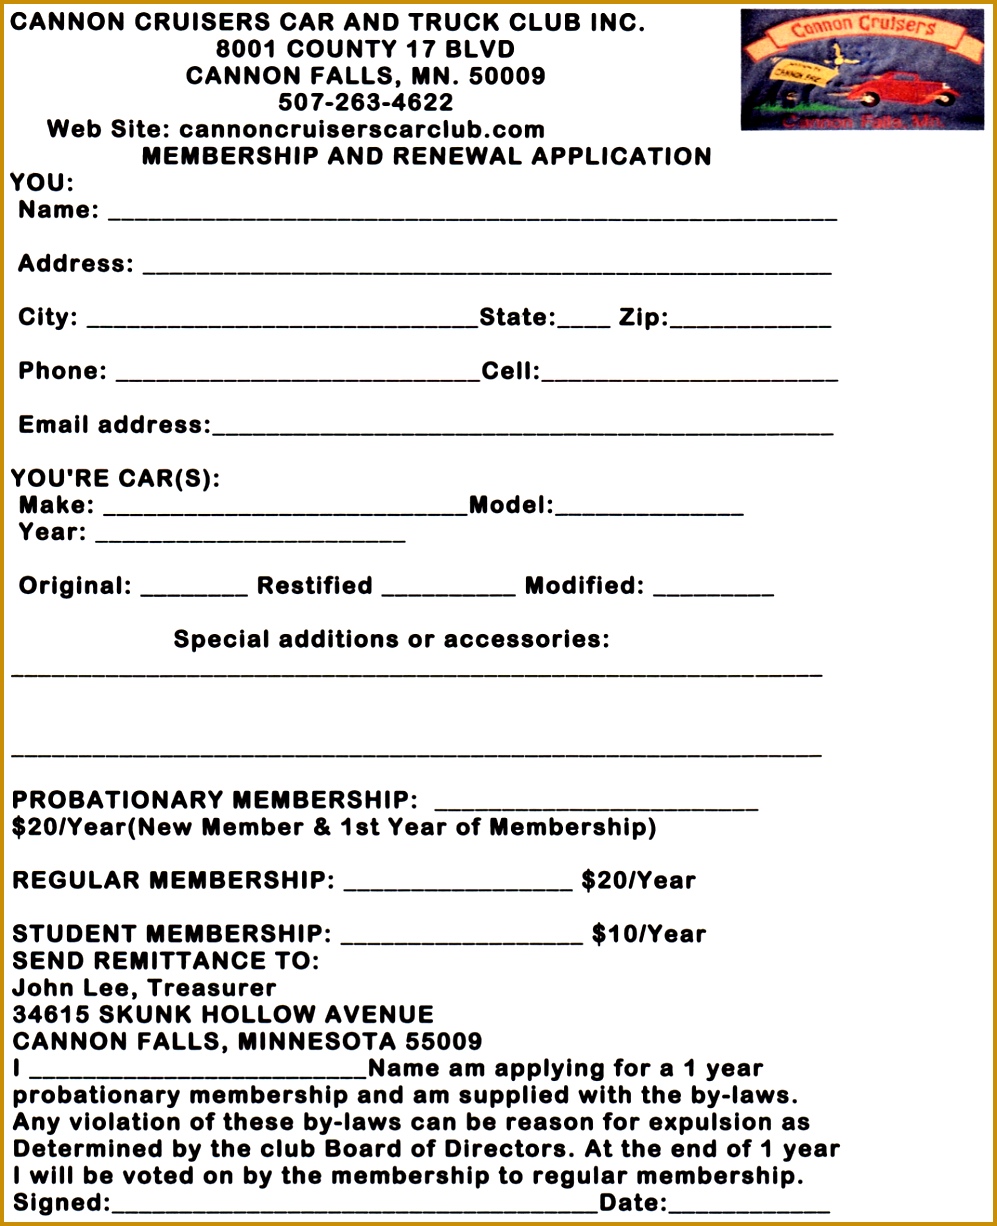 Cannon Cruisers Membership Application 9971226